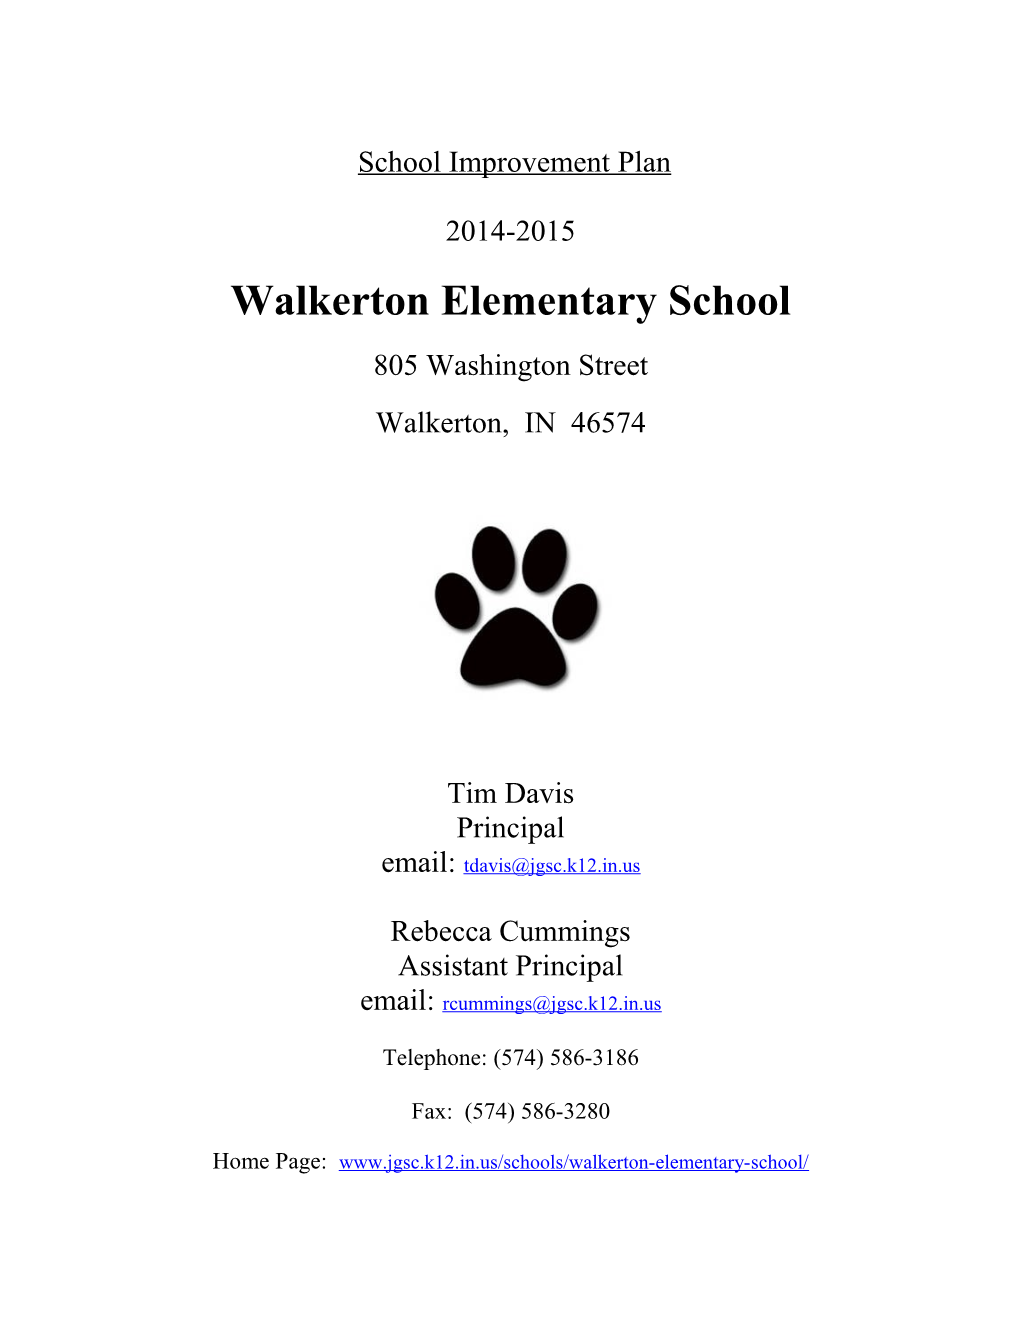 Walkerton Elementary School Improvement Team